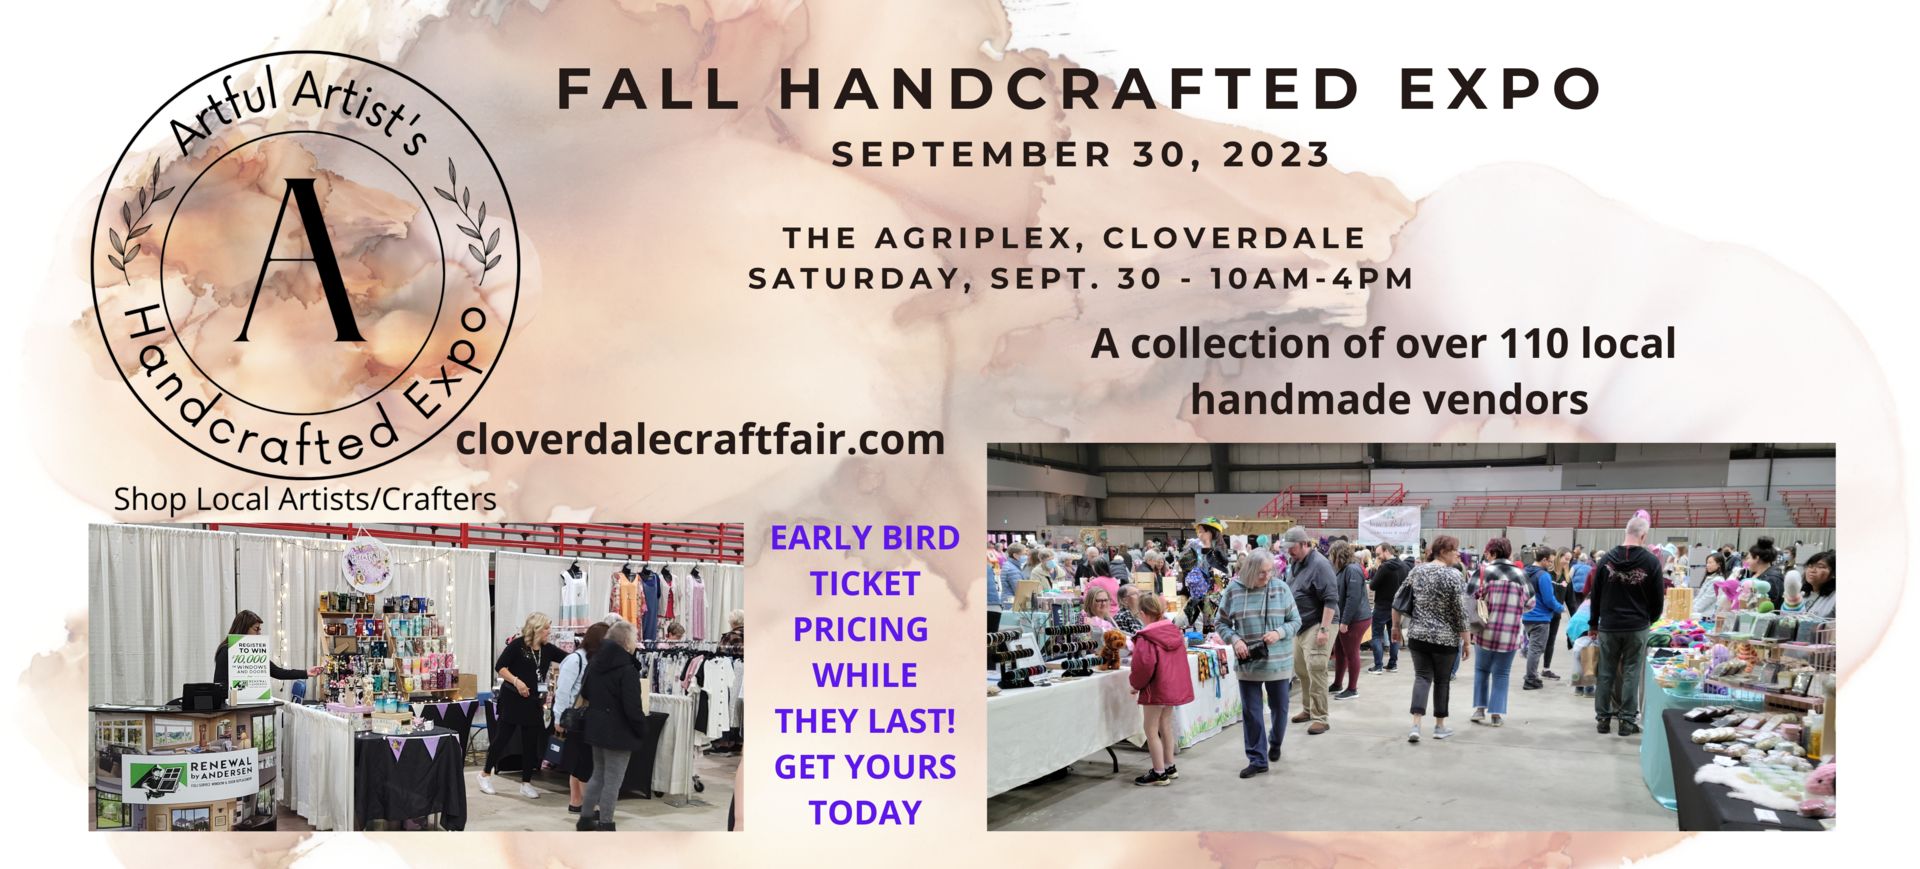 Fall Handcrafted Expo Craft Fair, Surrey, British Columbia, Canada